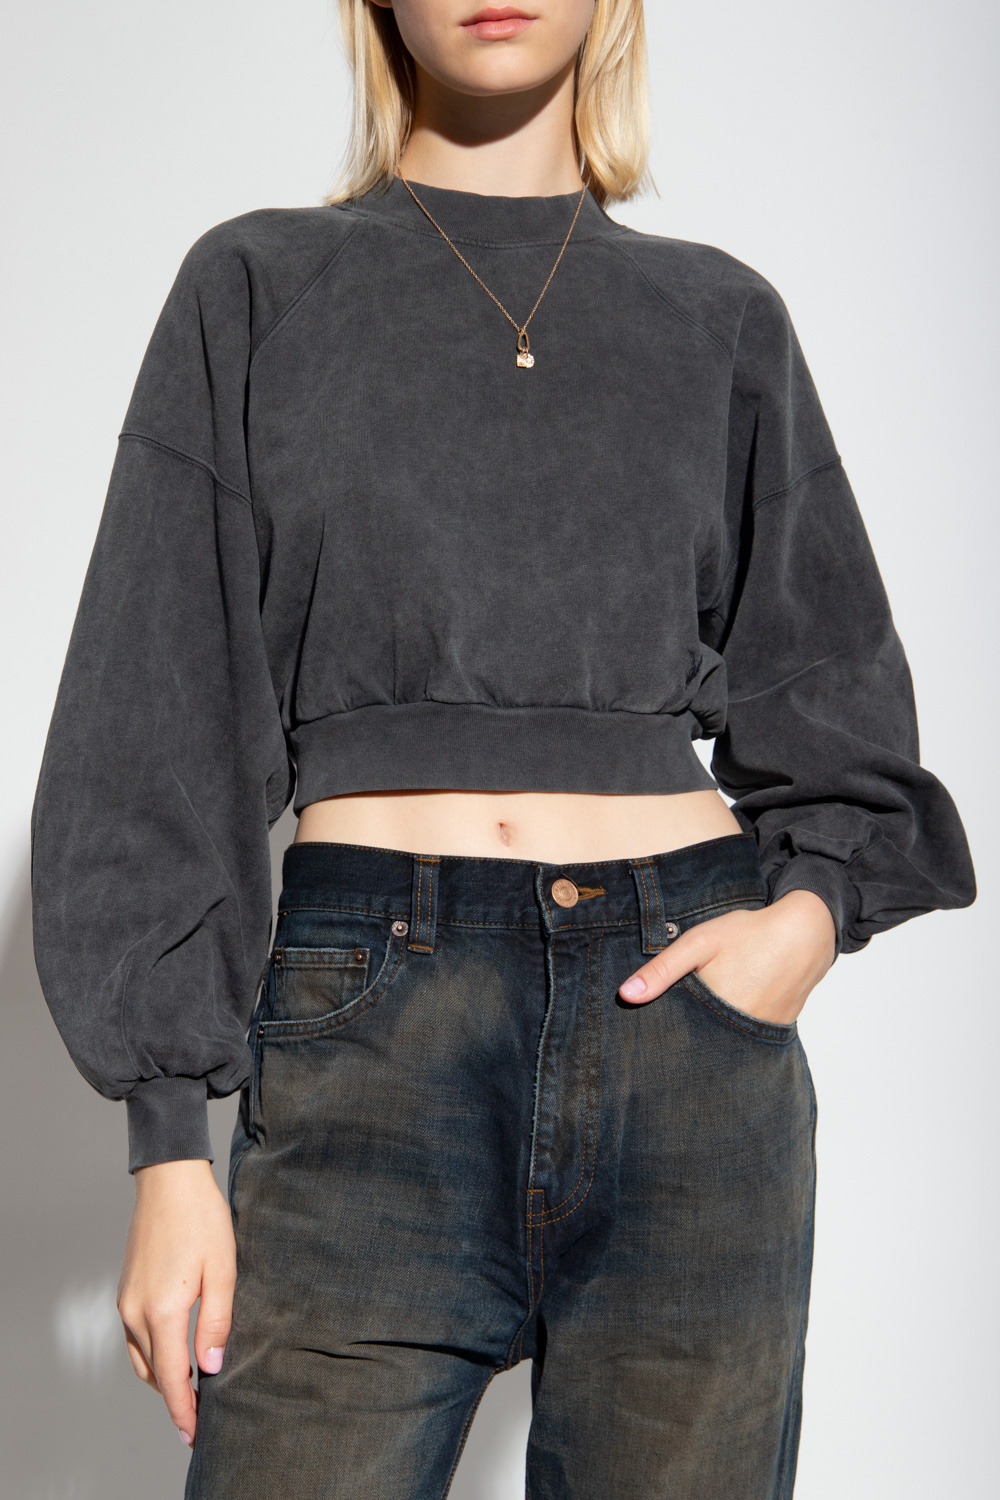 AllSaints ‘Tayla’ sweatshirt